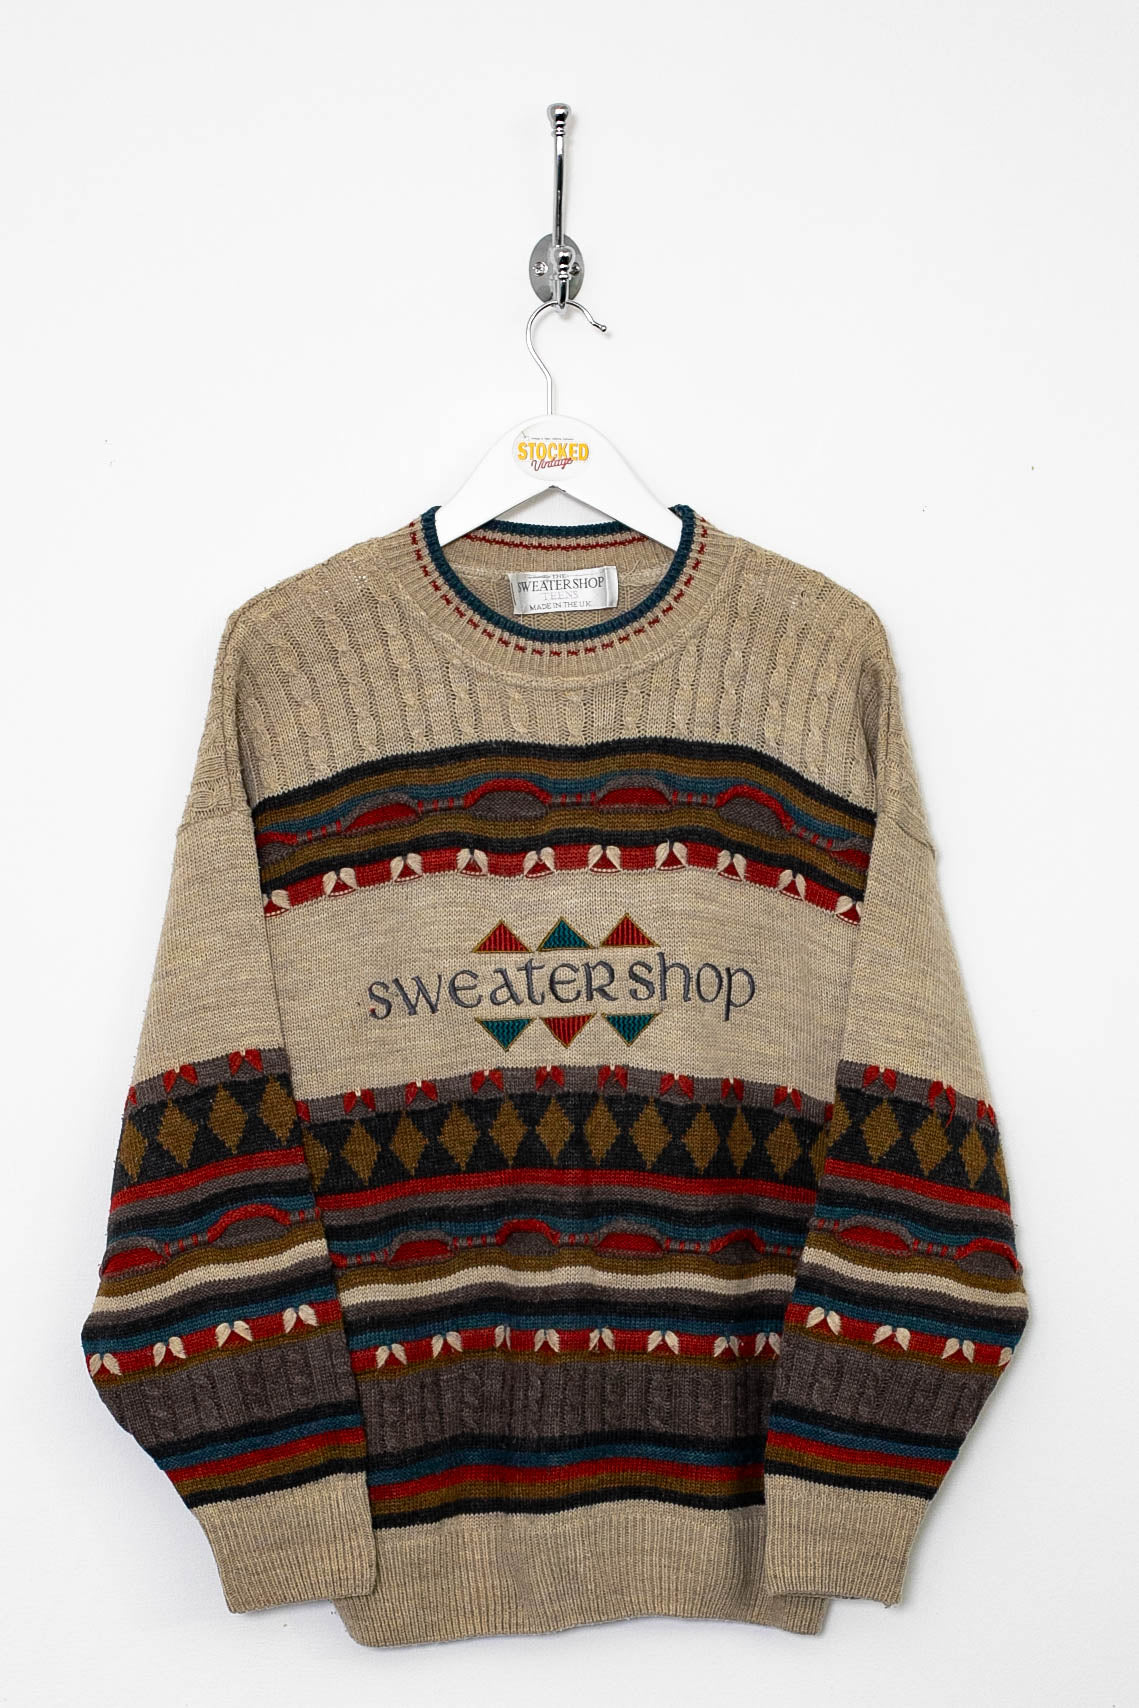 90s Sweater Shop Knit Jumper (S)